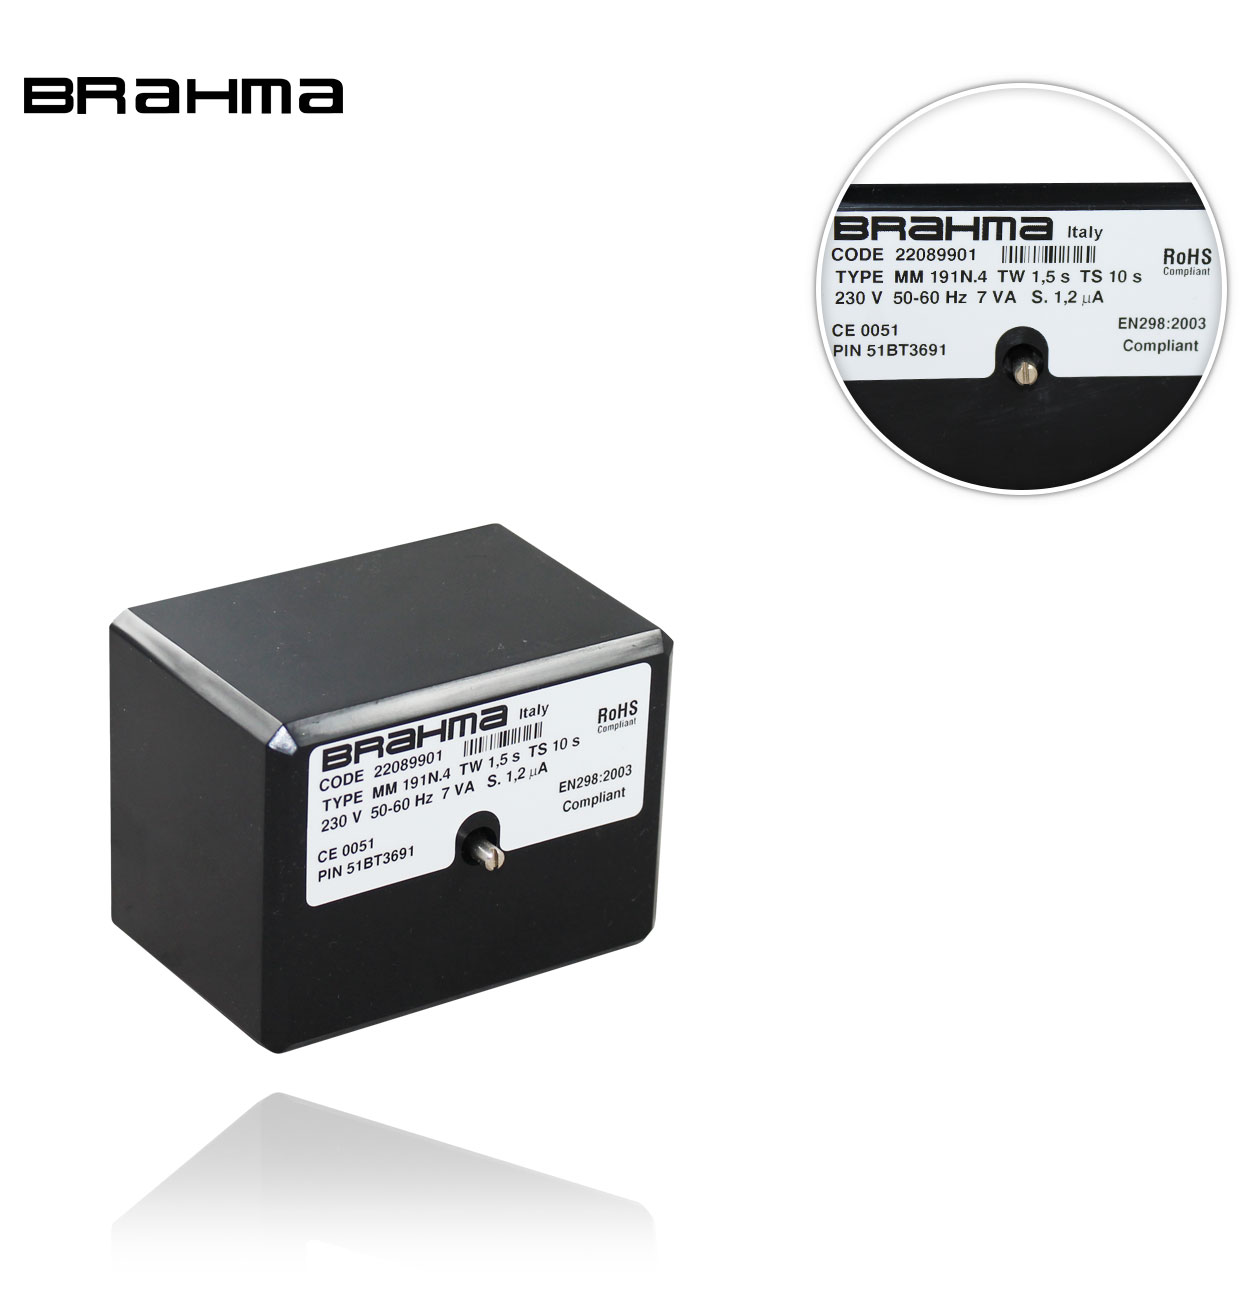 MM 191.4 TW1.5 TS10S 220V 8KW BRAHMA GAS EUROBOX CONTROL BOX